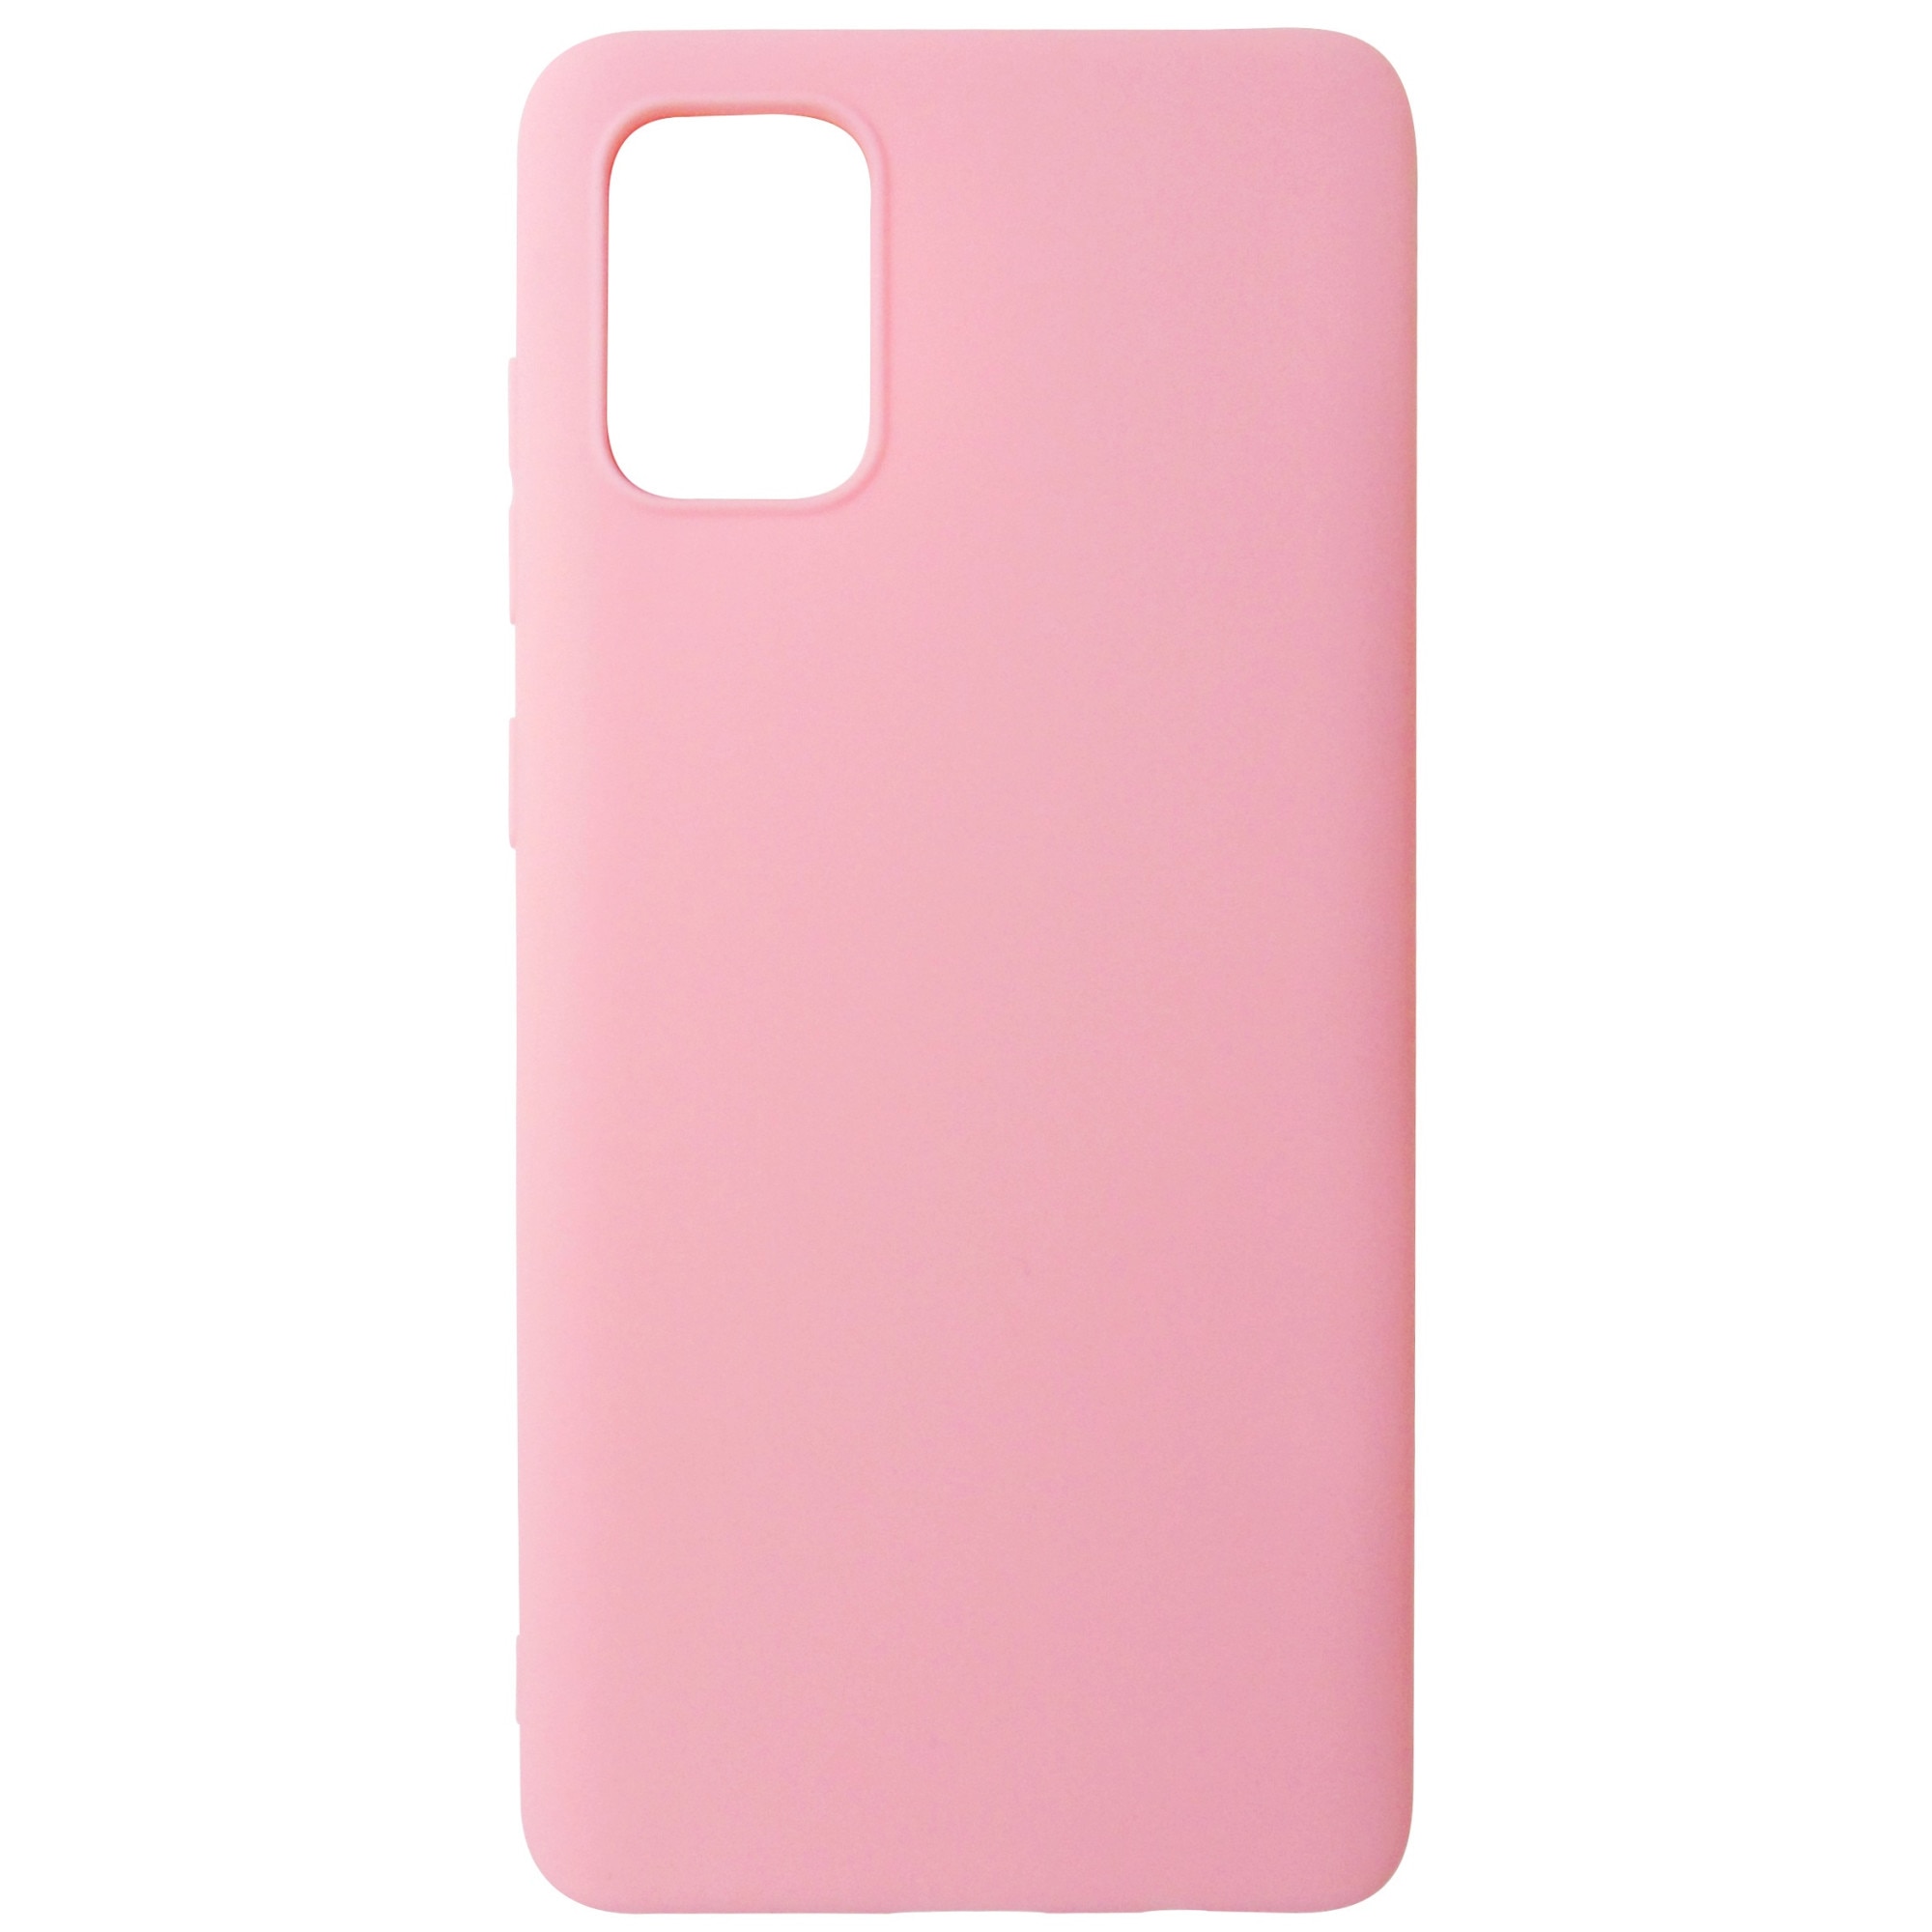 Husa silicon roz mat pentru Samsung Galaxy A71 (SM-A715F) - eMAG.ro